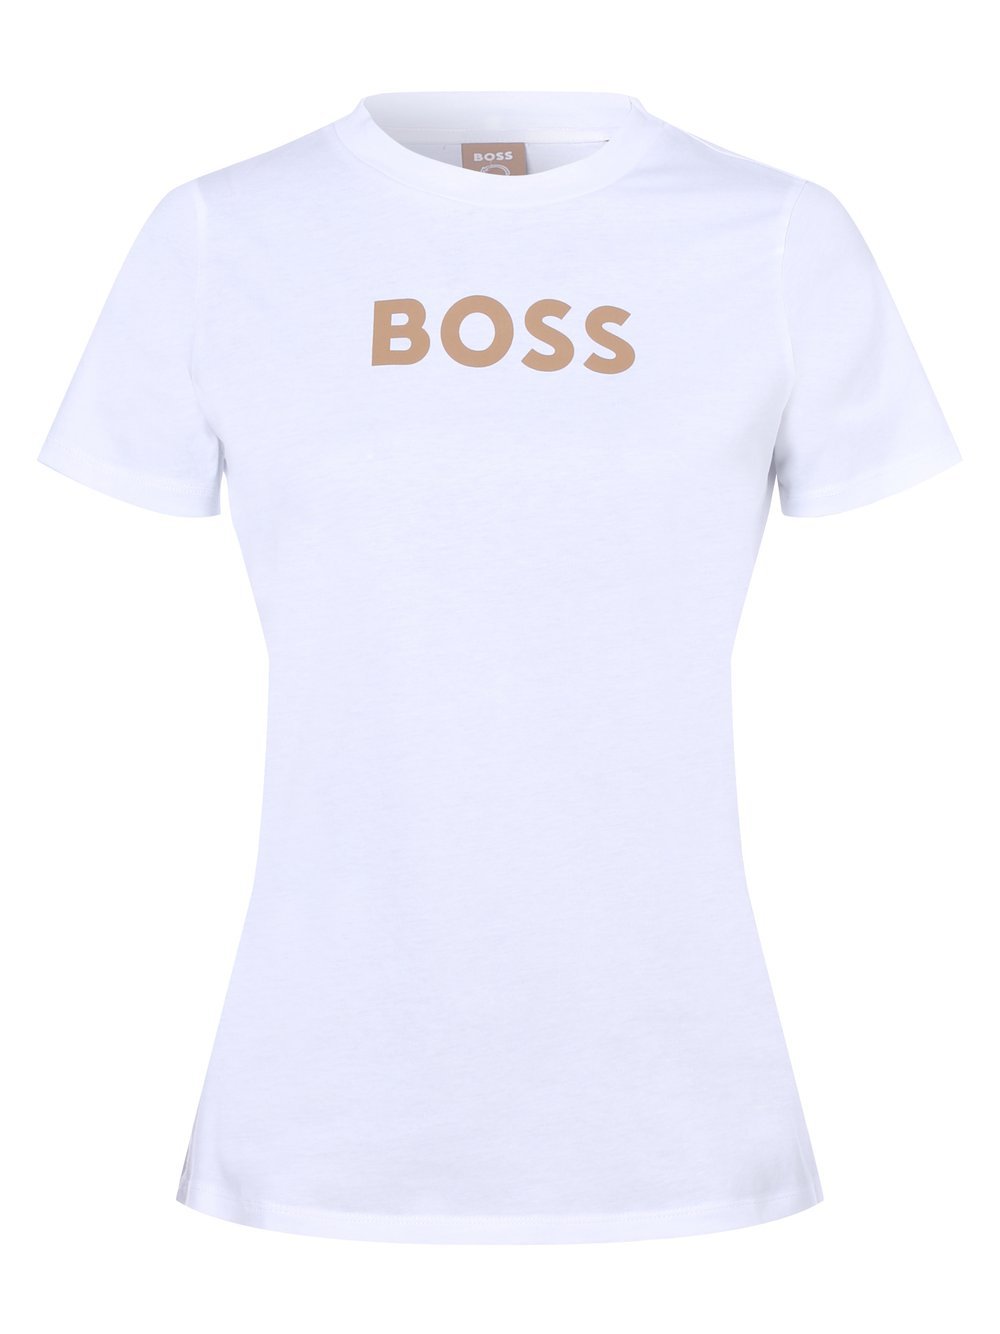 BOSS - T-shirt damski – C_Elogo_5, biały